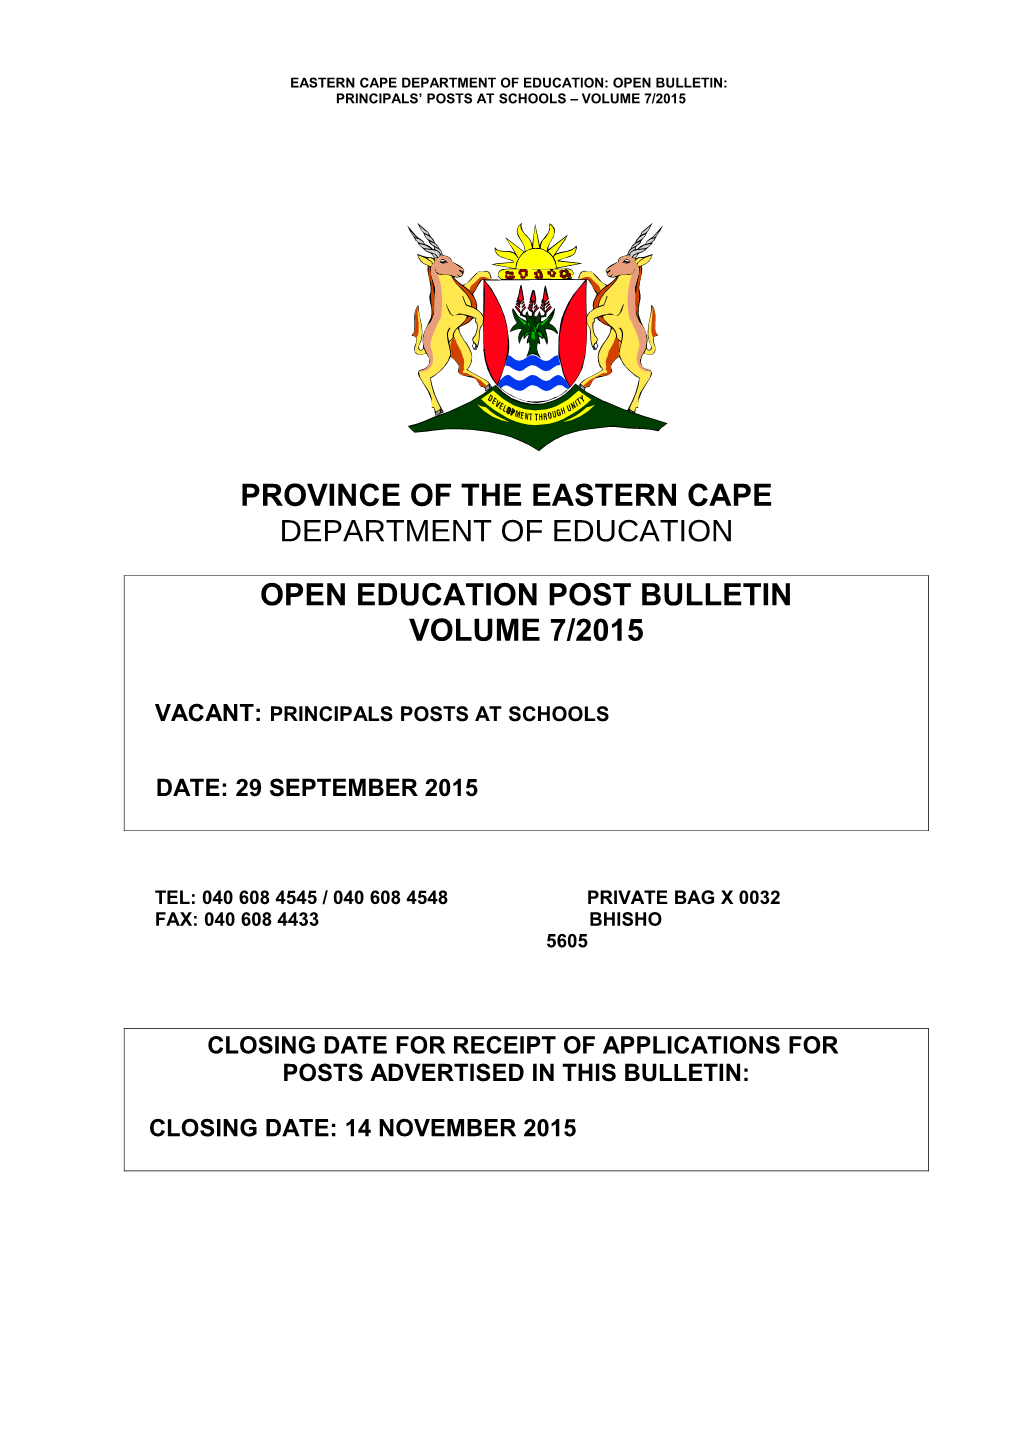 Eastern Cape Department of Education: Open Bulletin